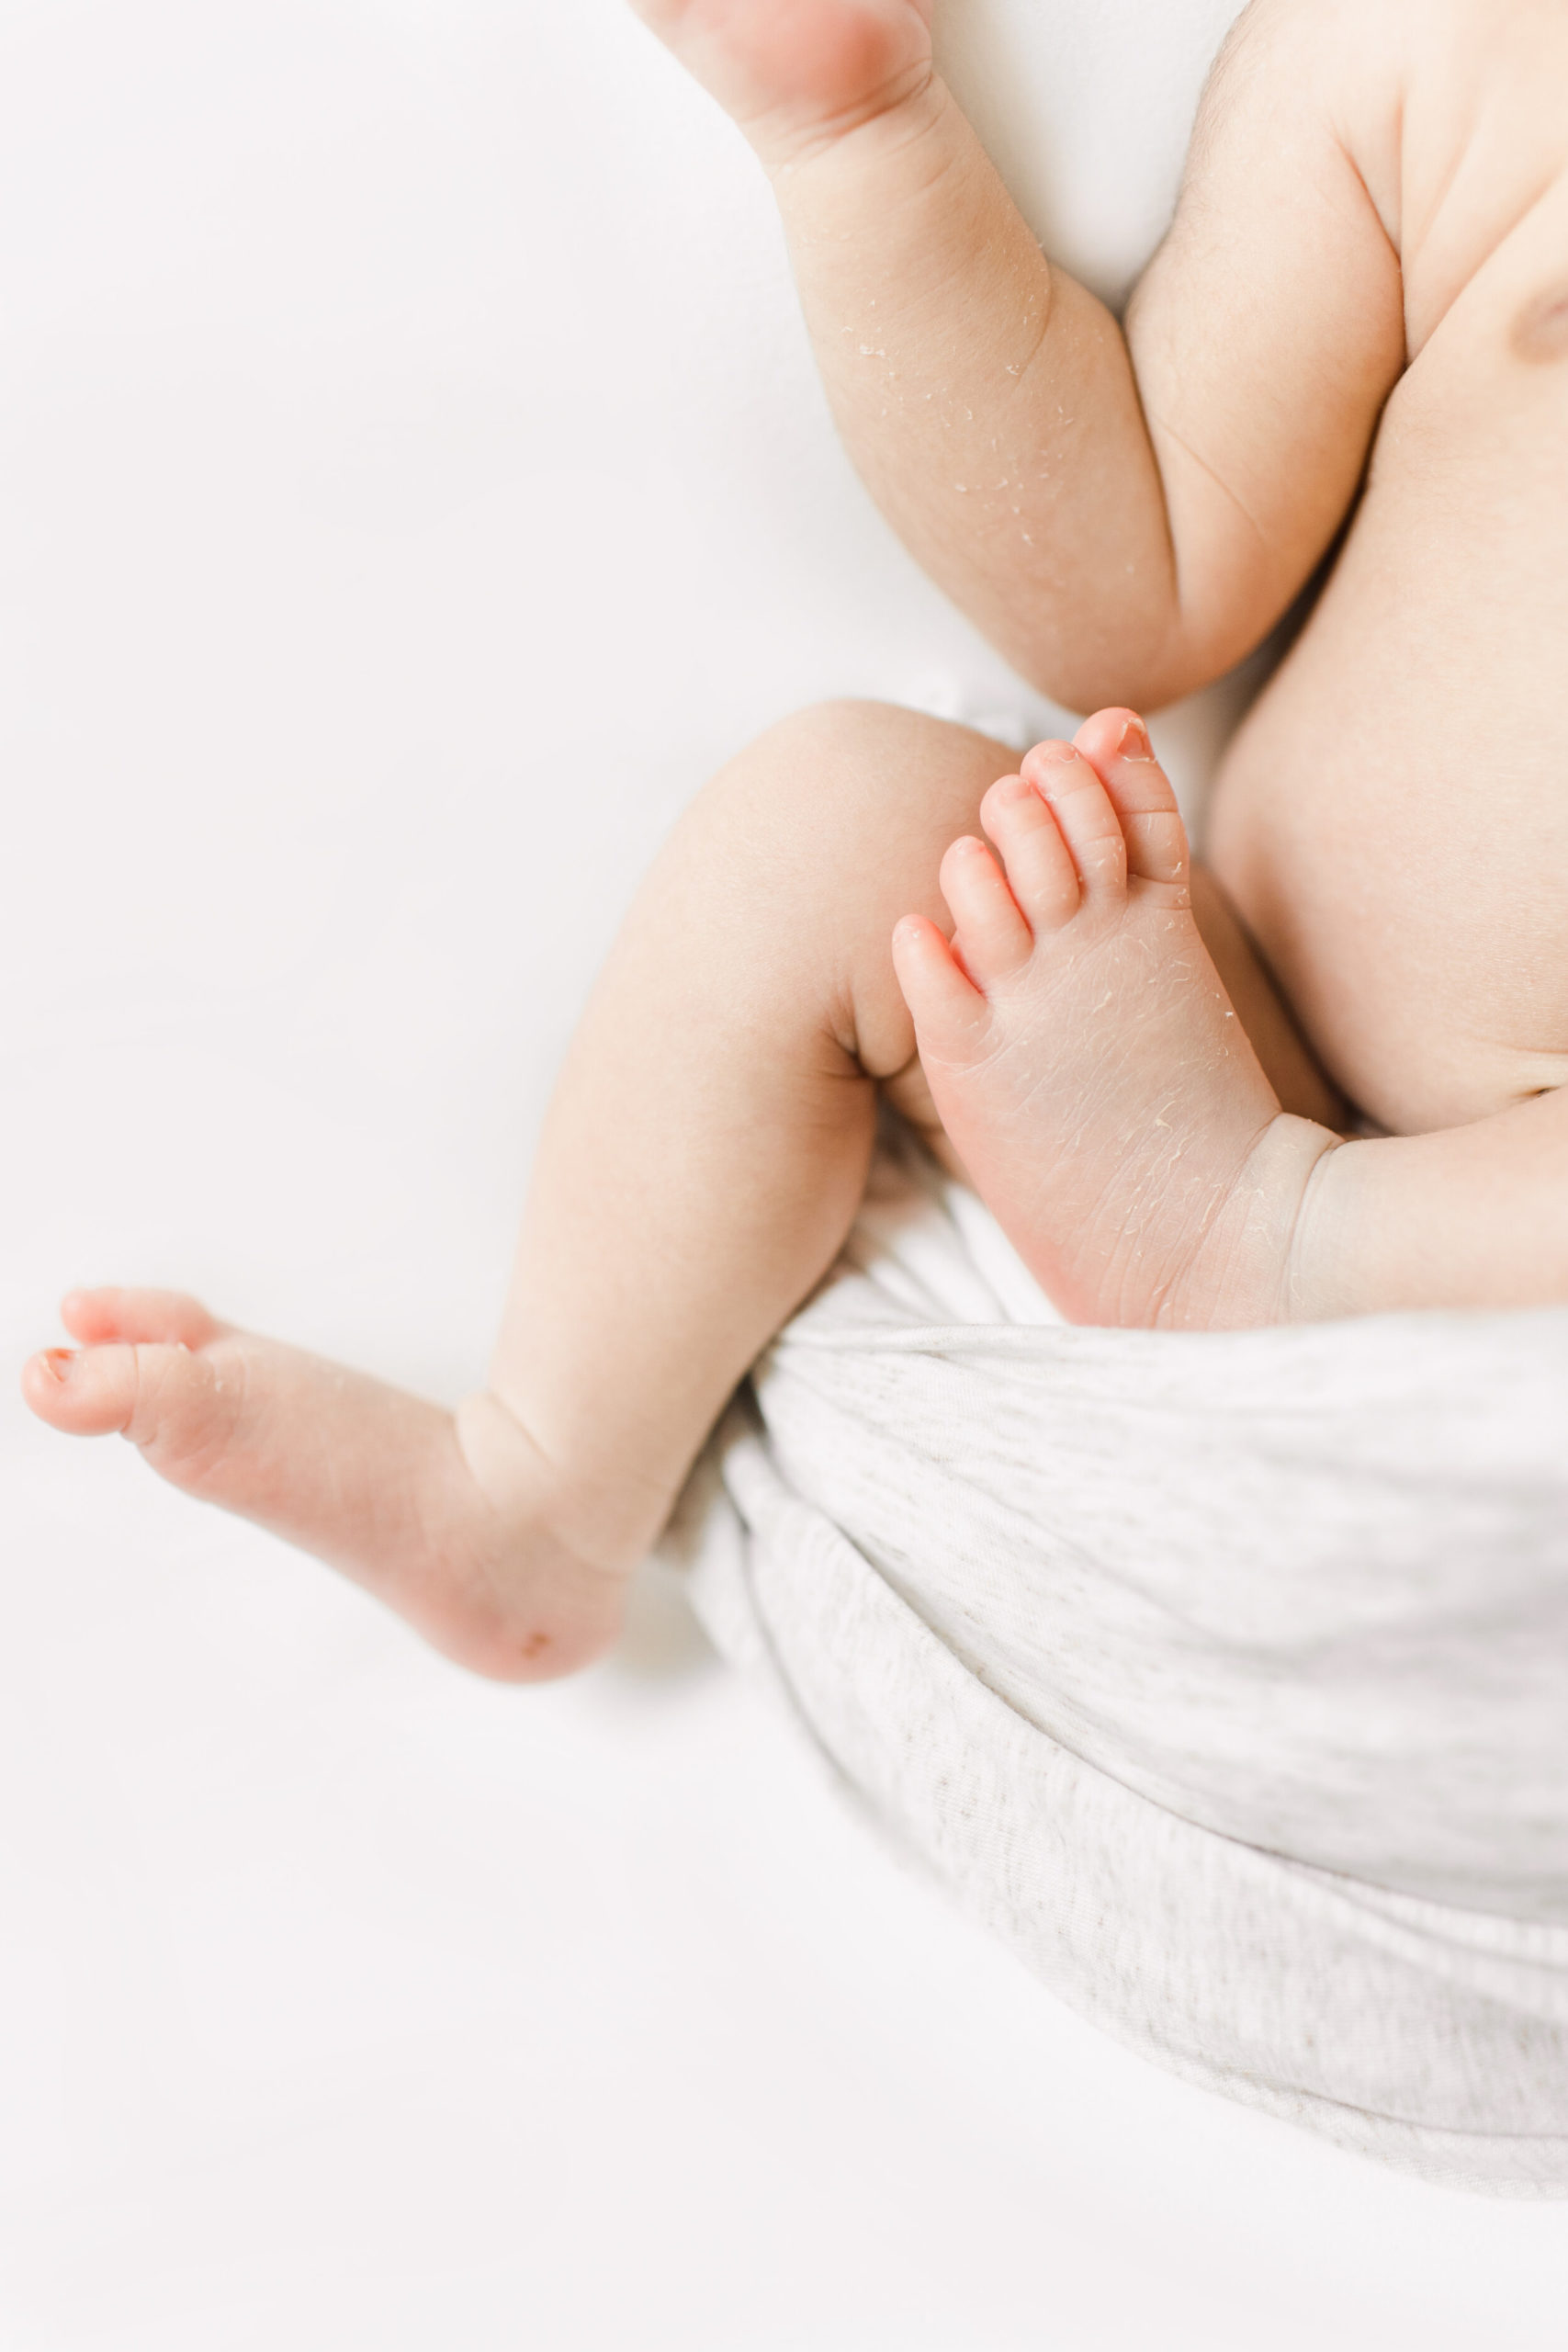 newborn baby details - tiny toes